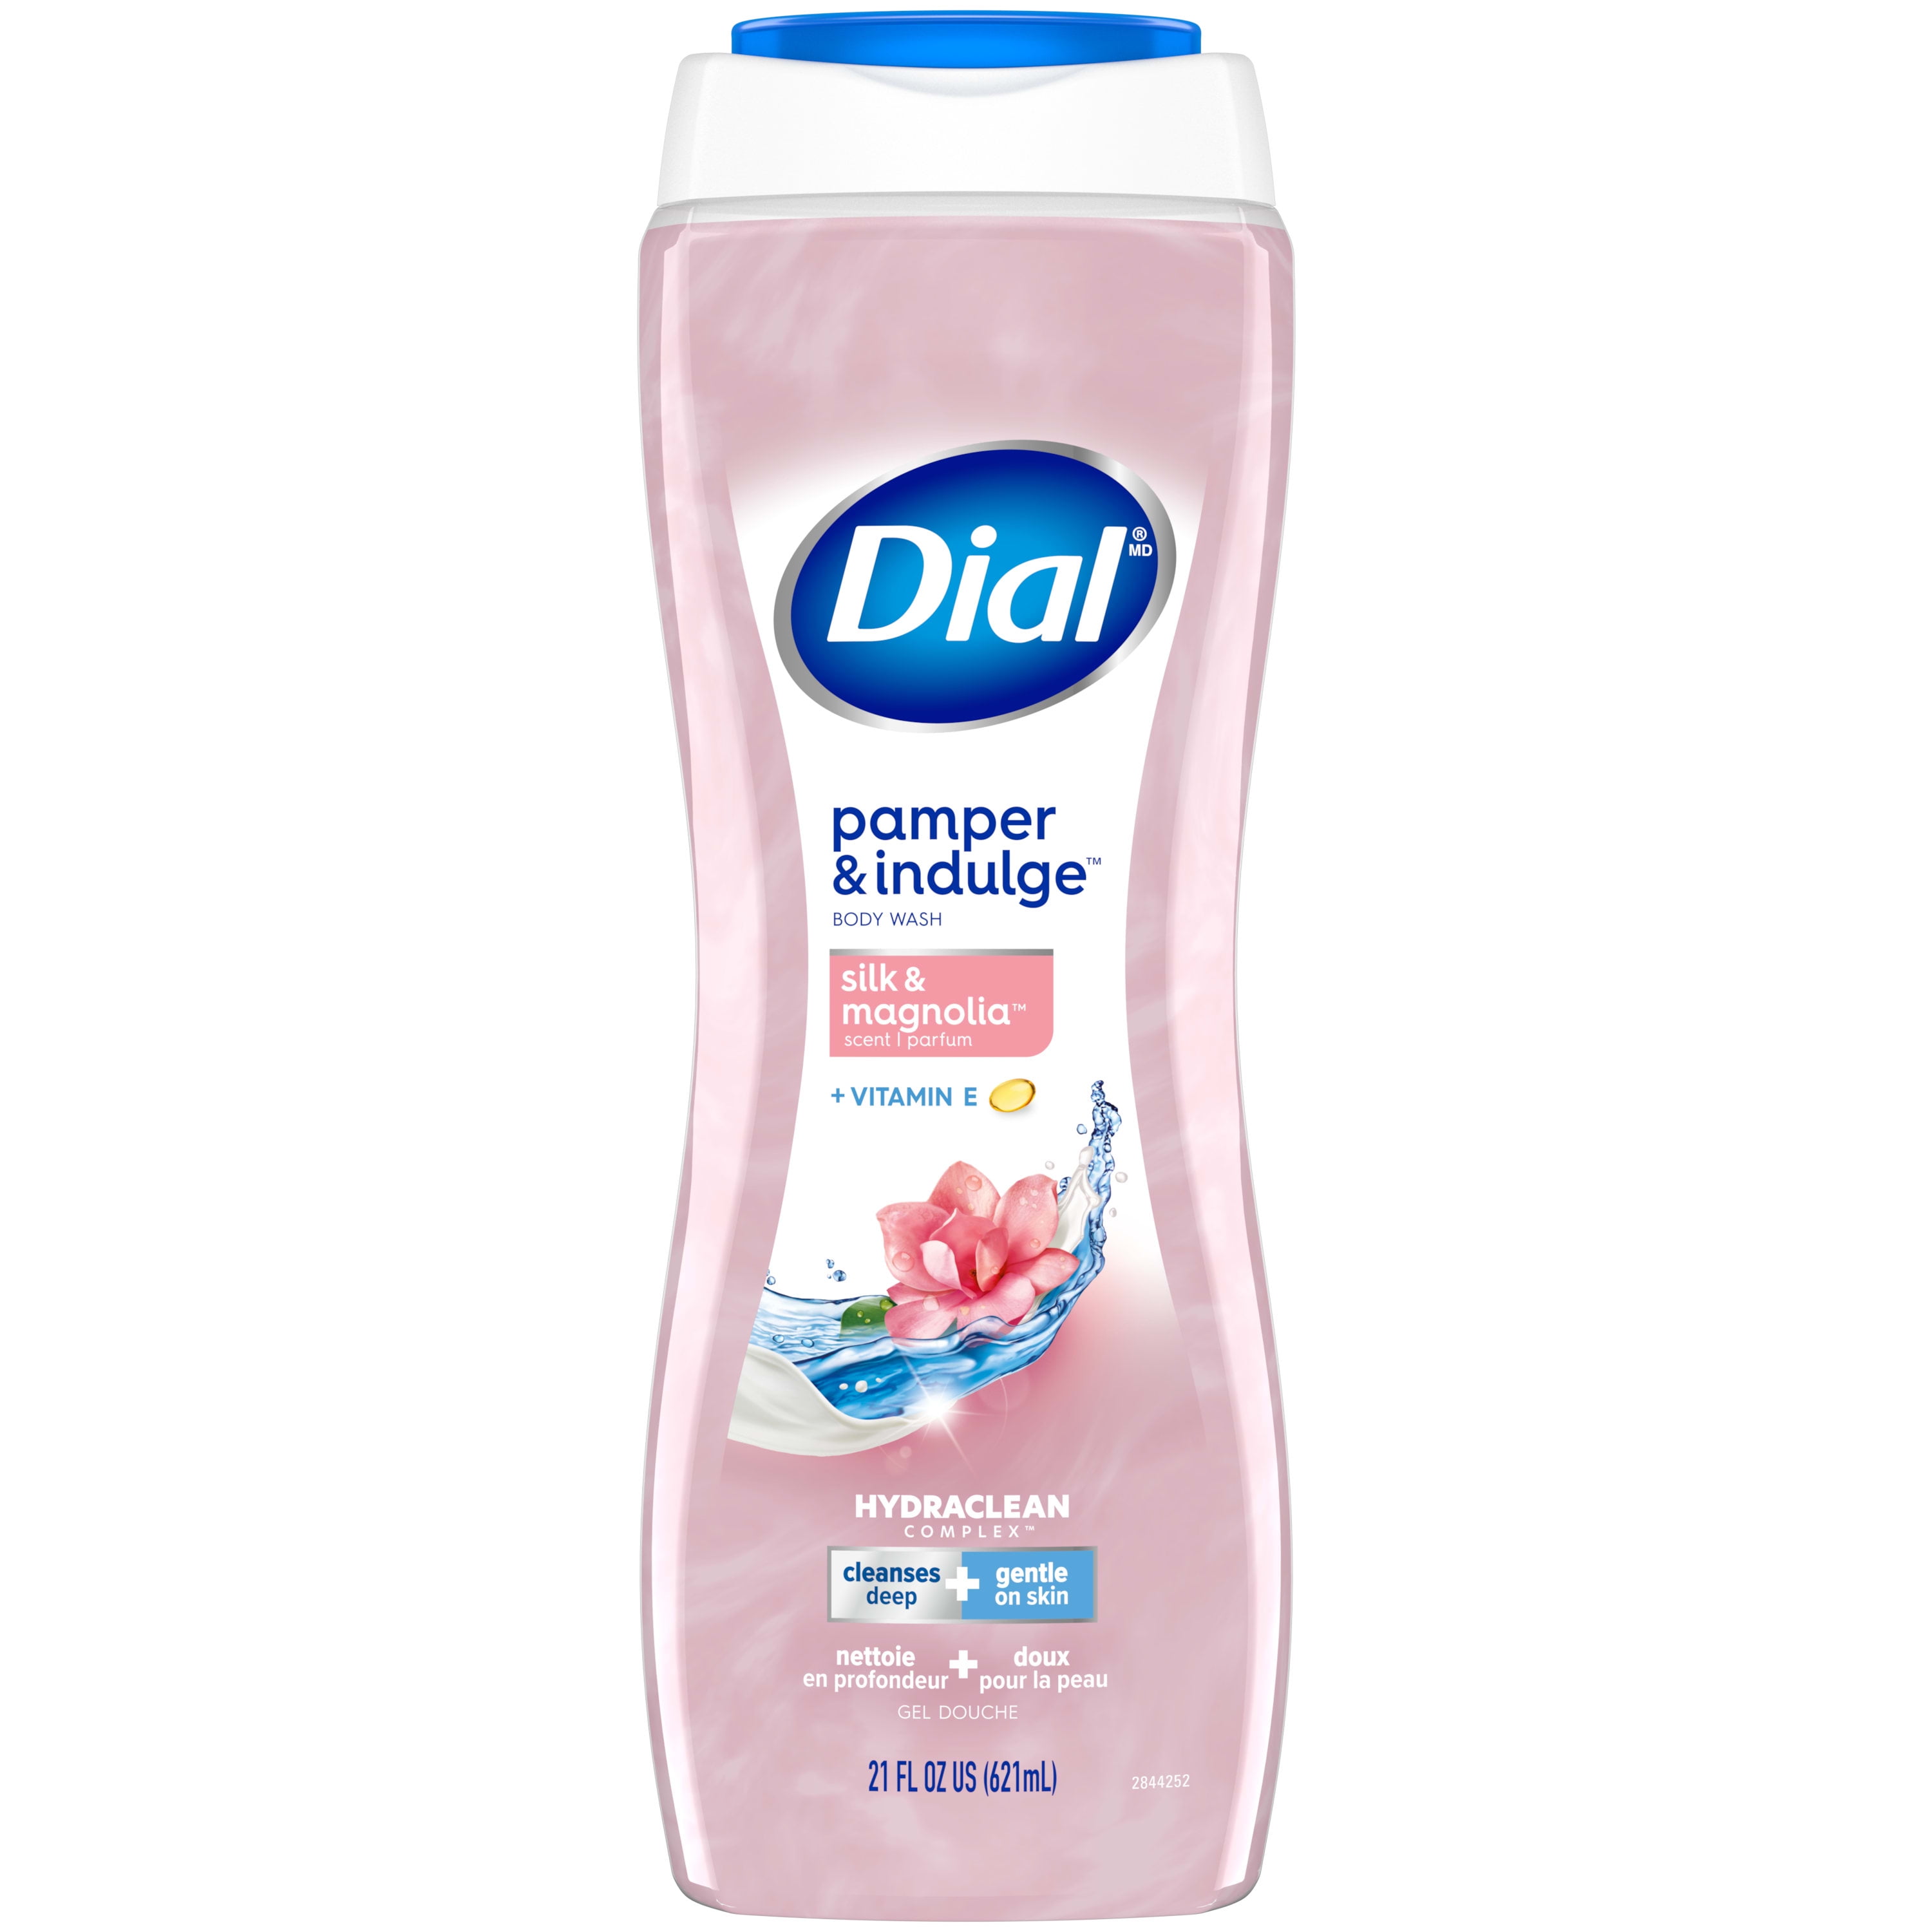 Dial Body Wash, Pamper & Indulge, Silk & Magnolia, 21 fl oz